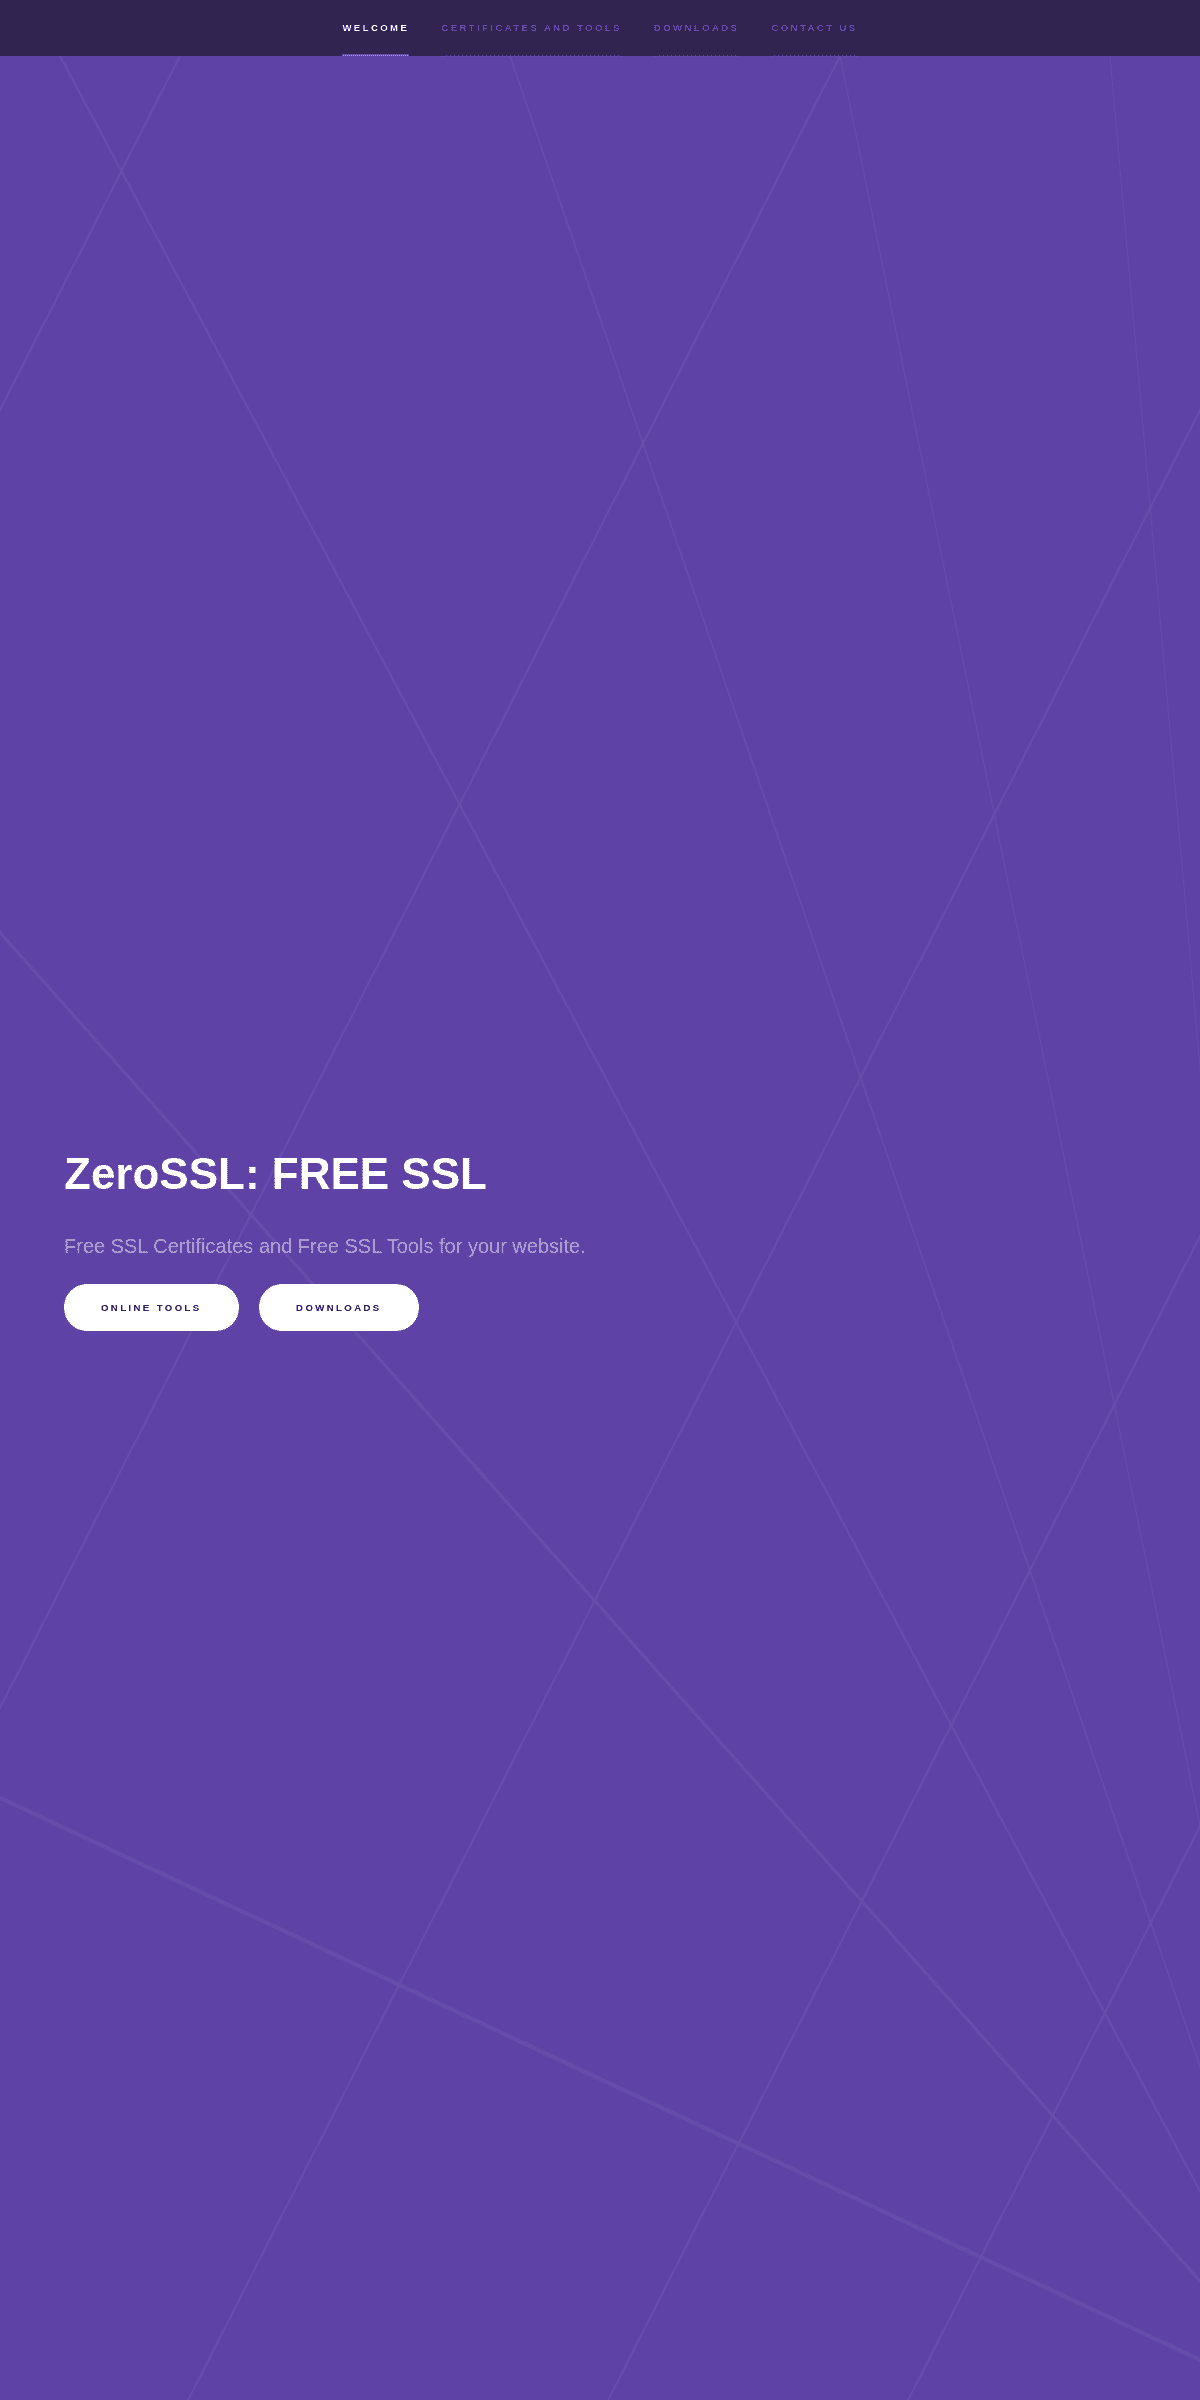 A complete backup of zerossl.com